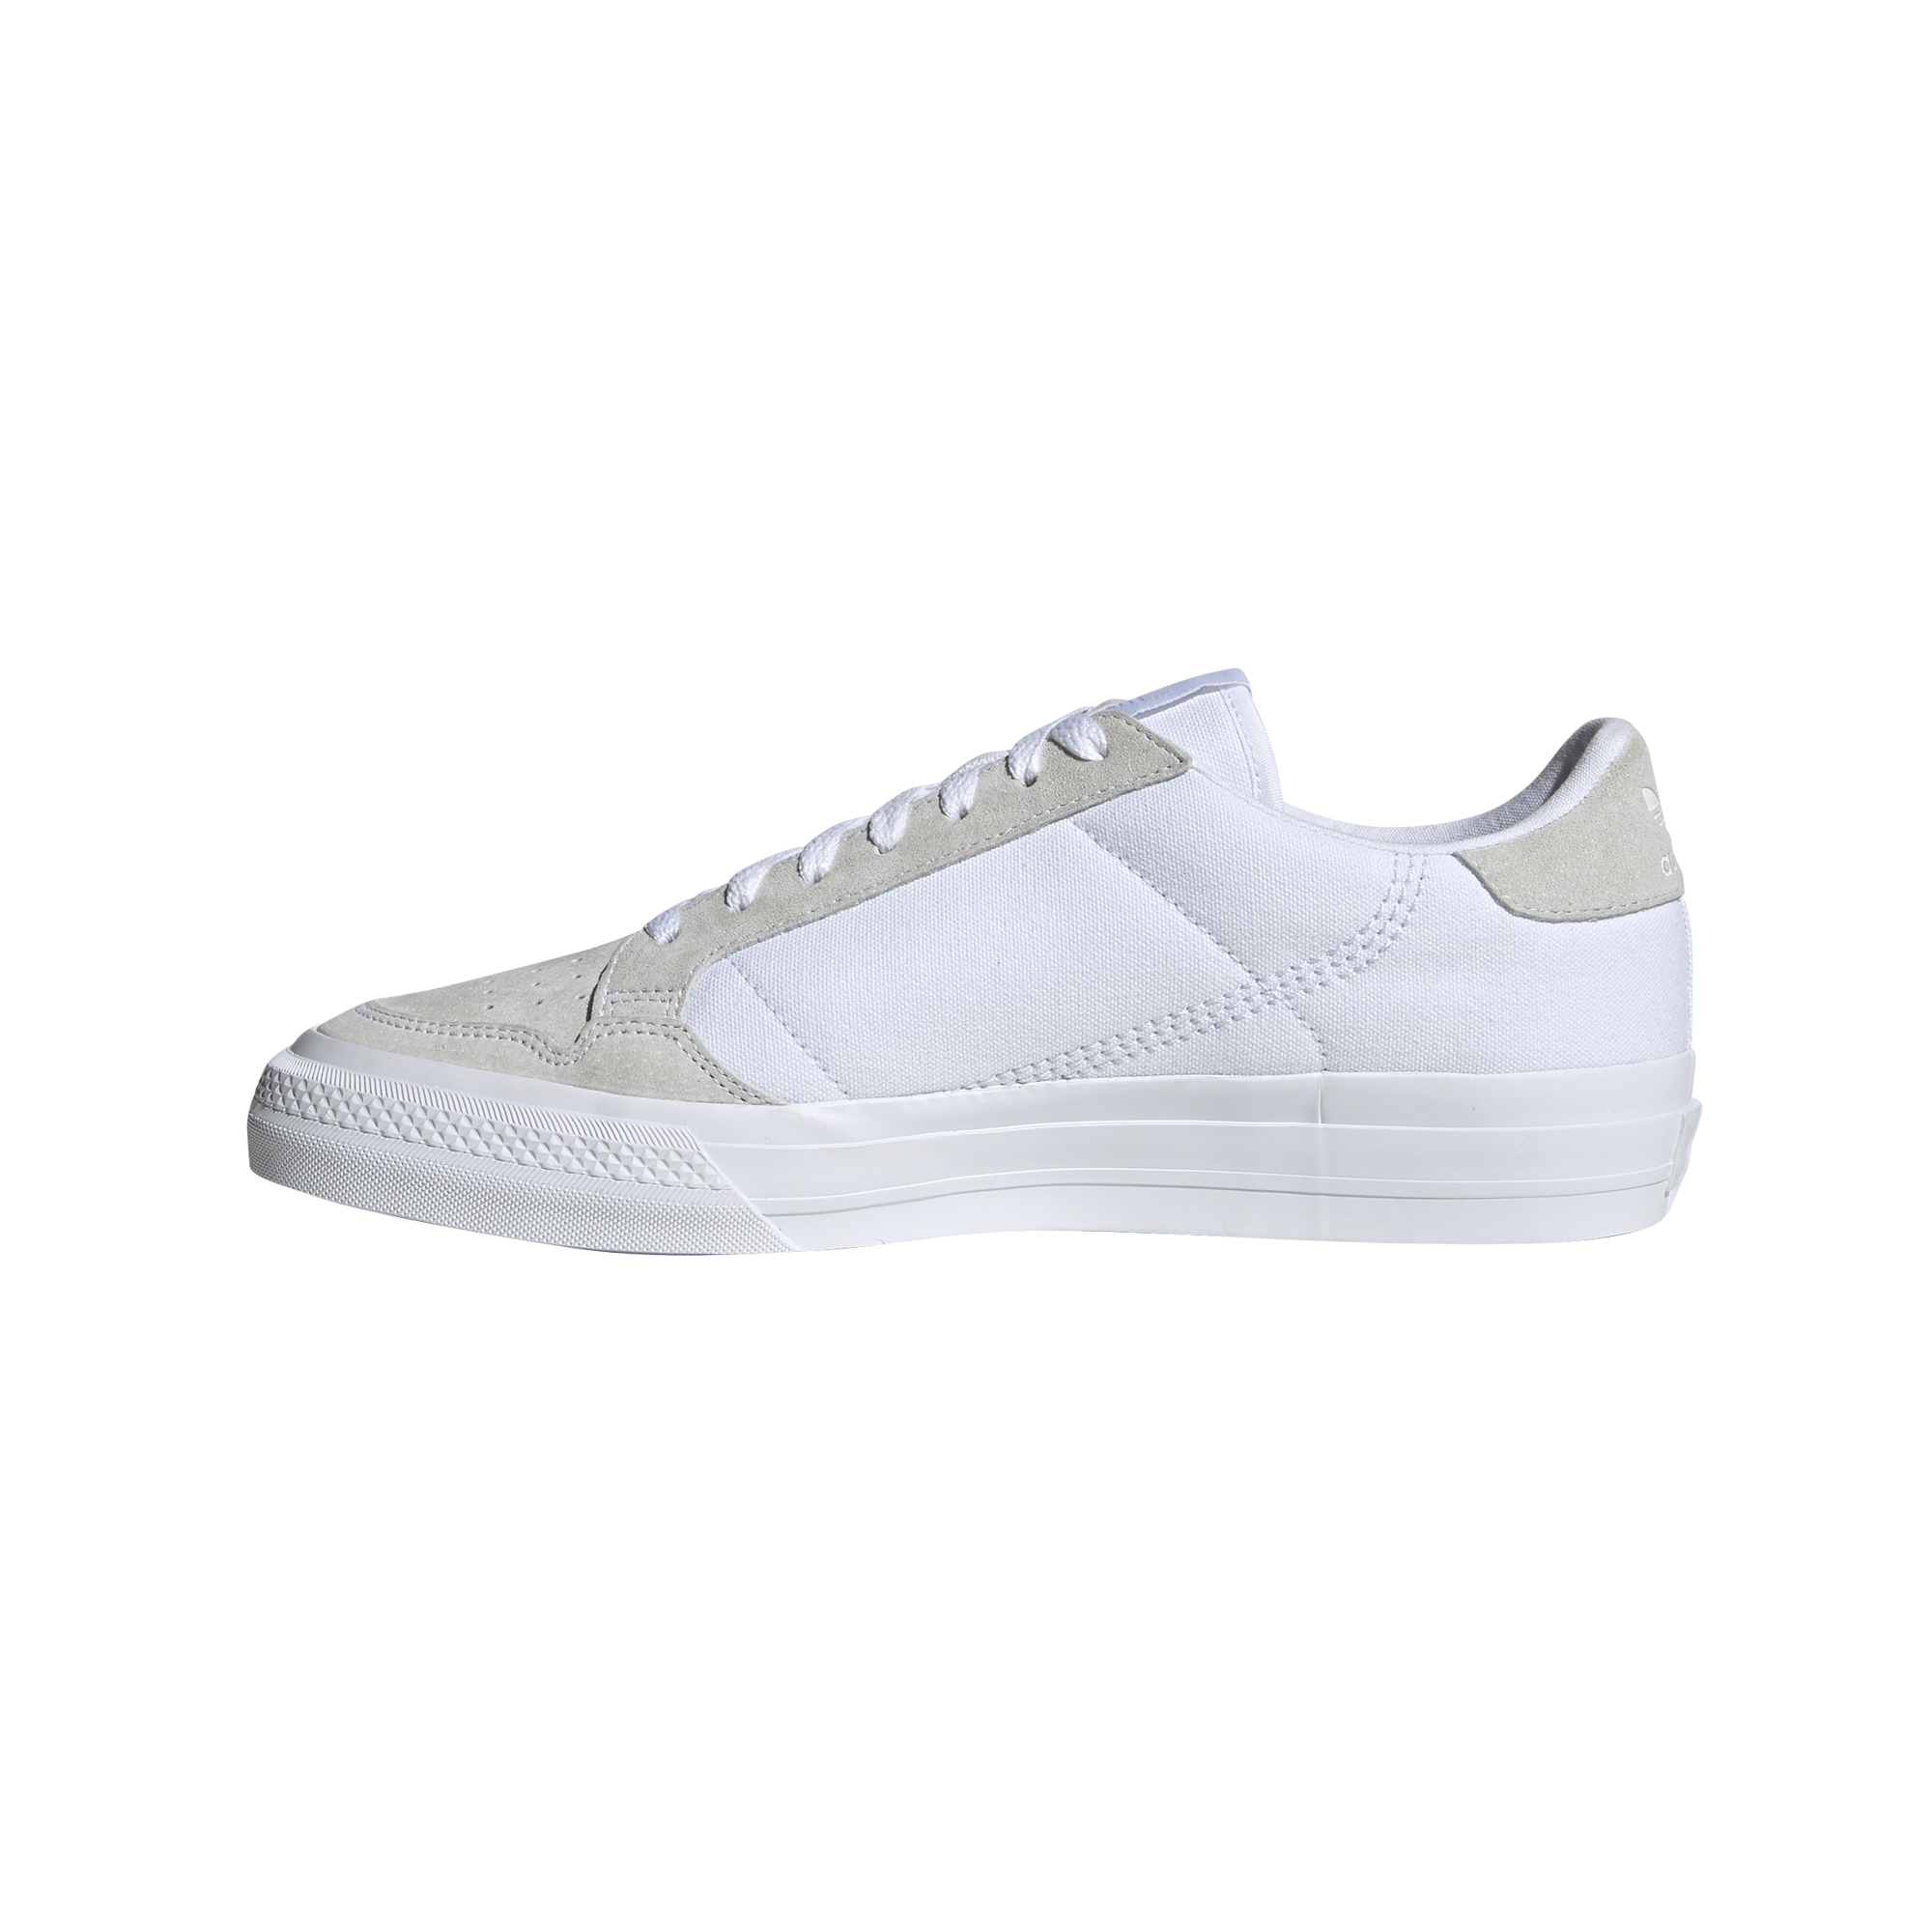 adidas Continental Vulc Ftw White/ Ftw White/ Ftw White EF3523